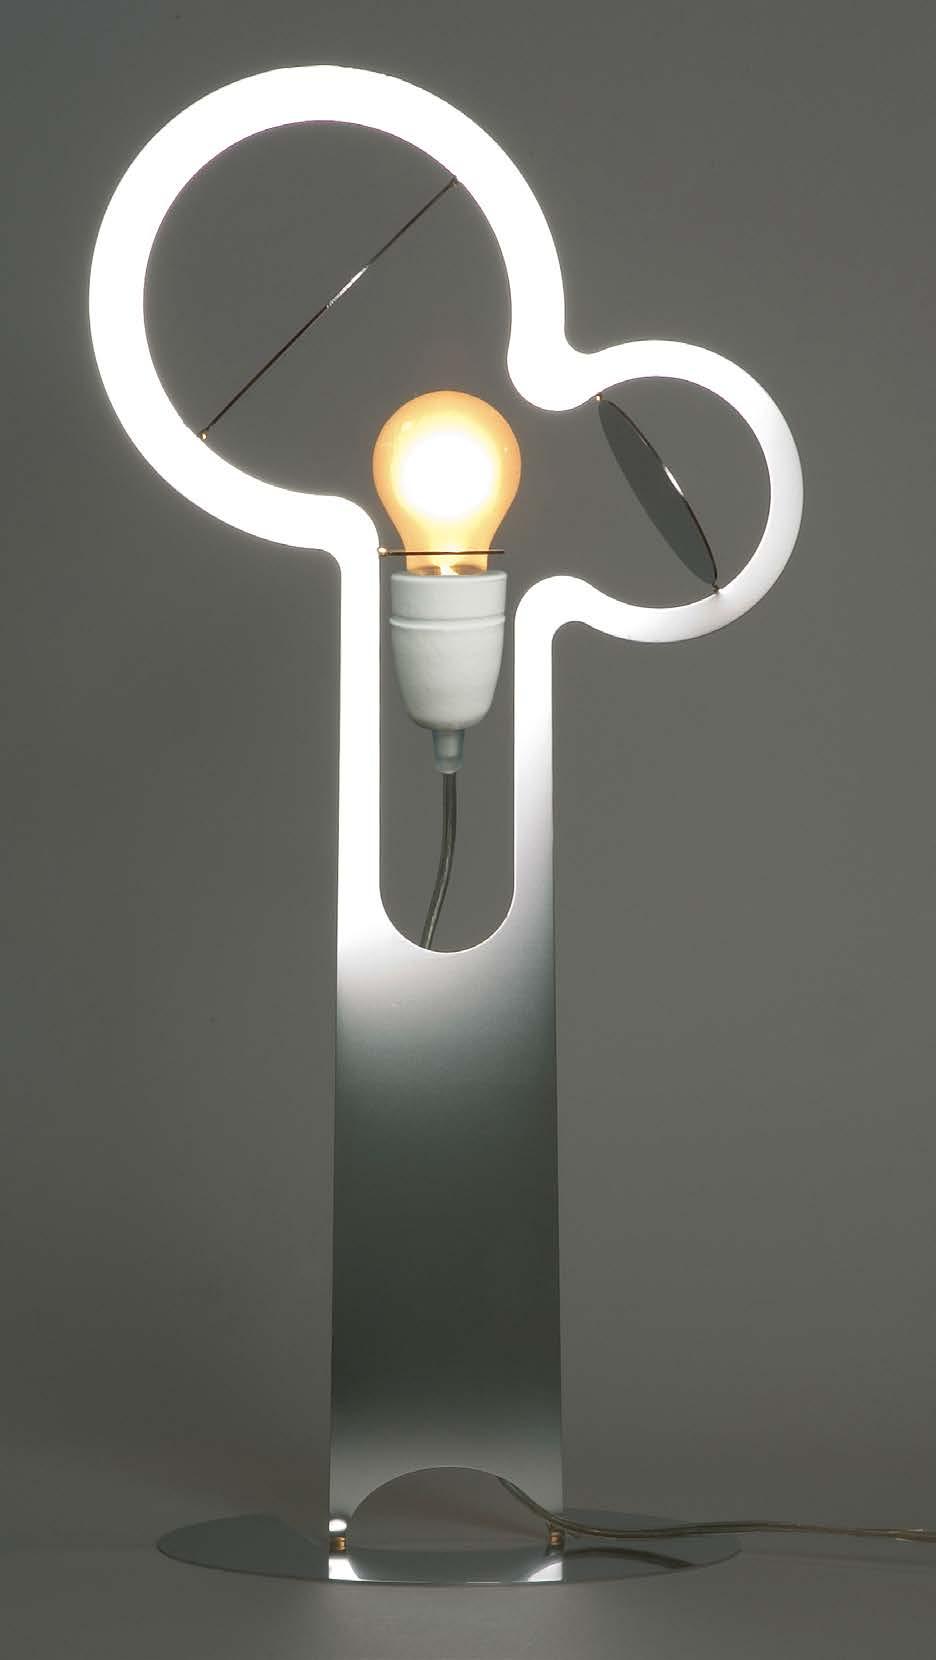 FIOCCO LAMP Design: Ronen Kadushin ECLIPSE LIGHT ECLIPSE LIGHT FIOCCO LAMP FIOCCO is a self-assembly modular lighting system, made up of interlocking modules.